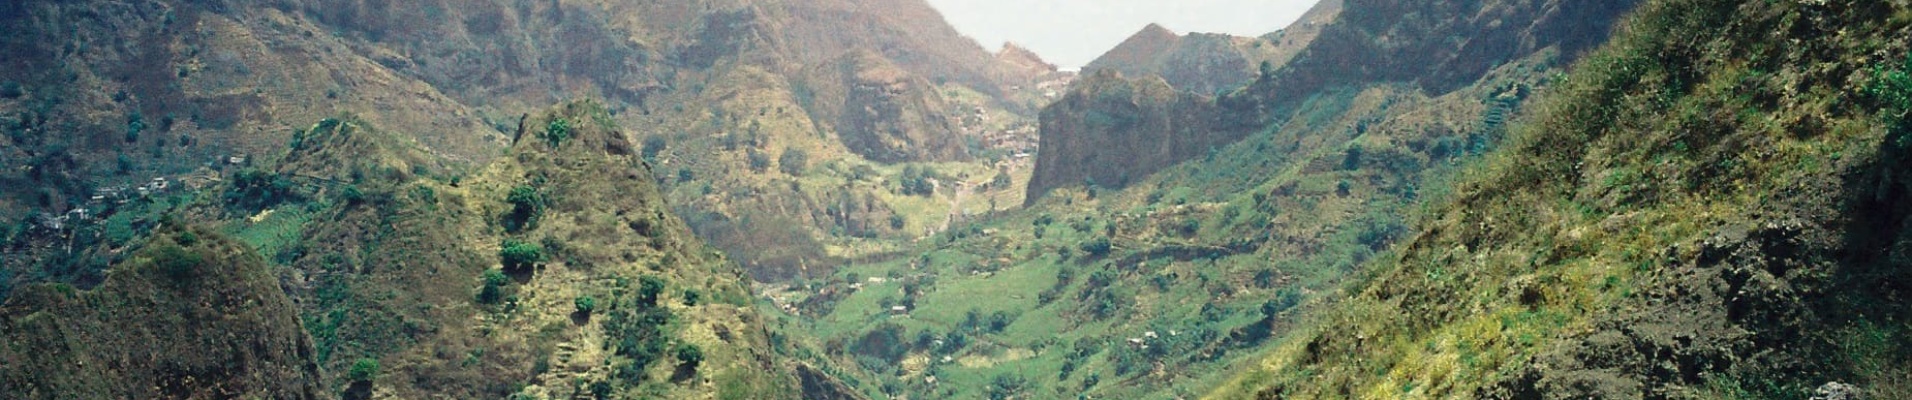 Vallée de Paul, Santo Antao, Cap-Vert